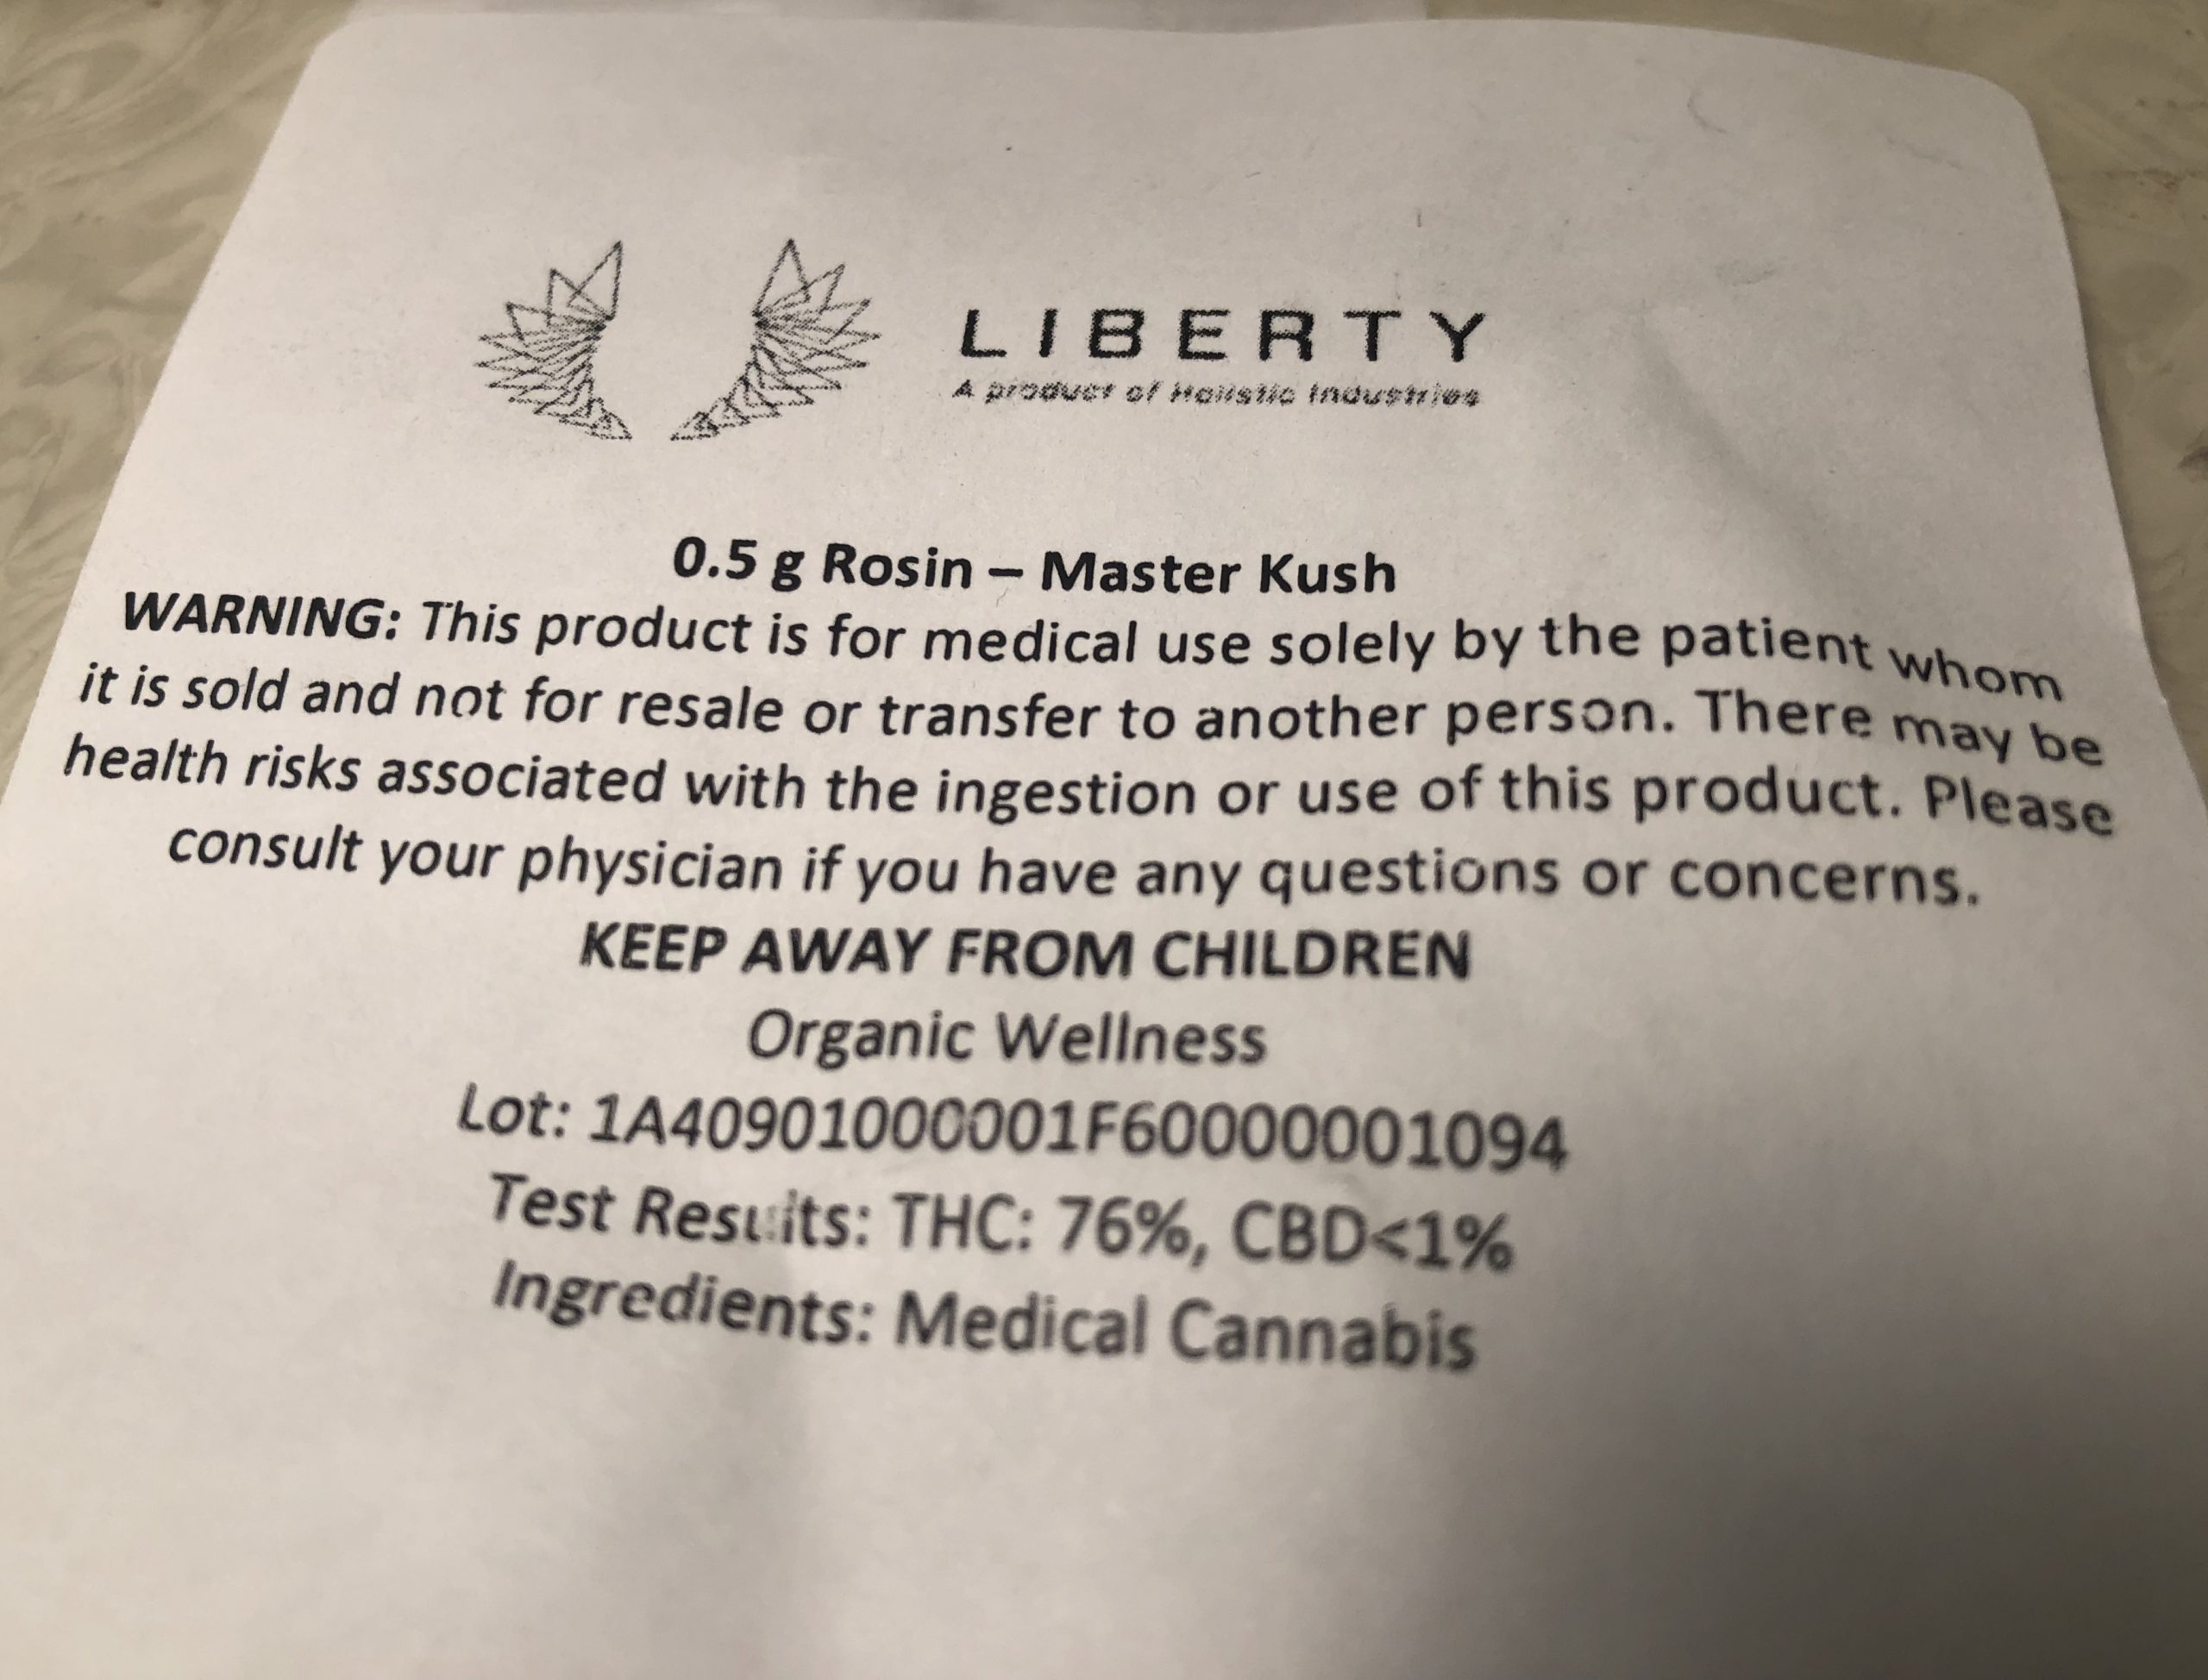 Liberty cannabis packaging